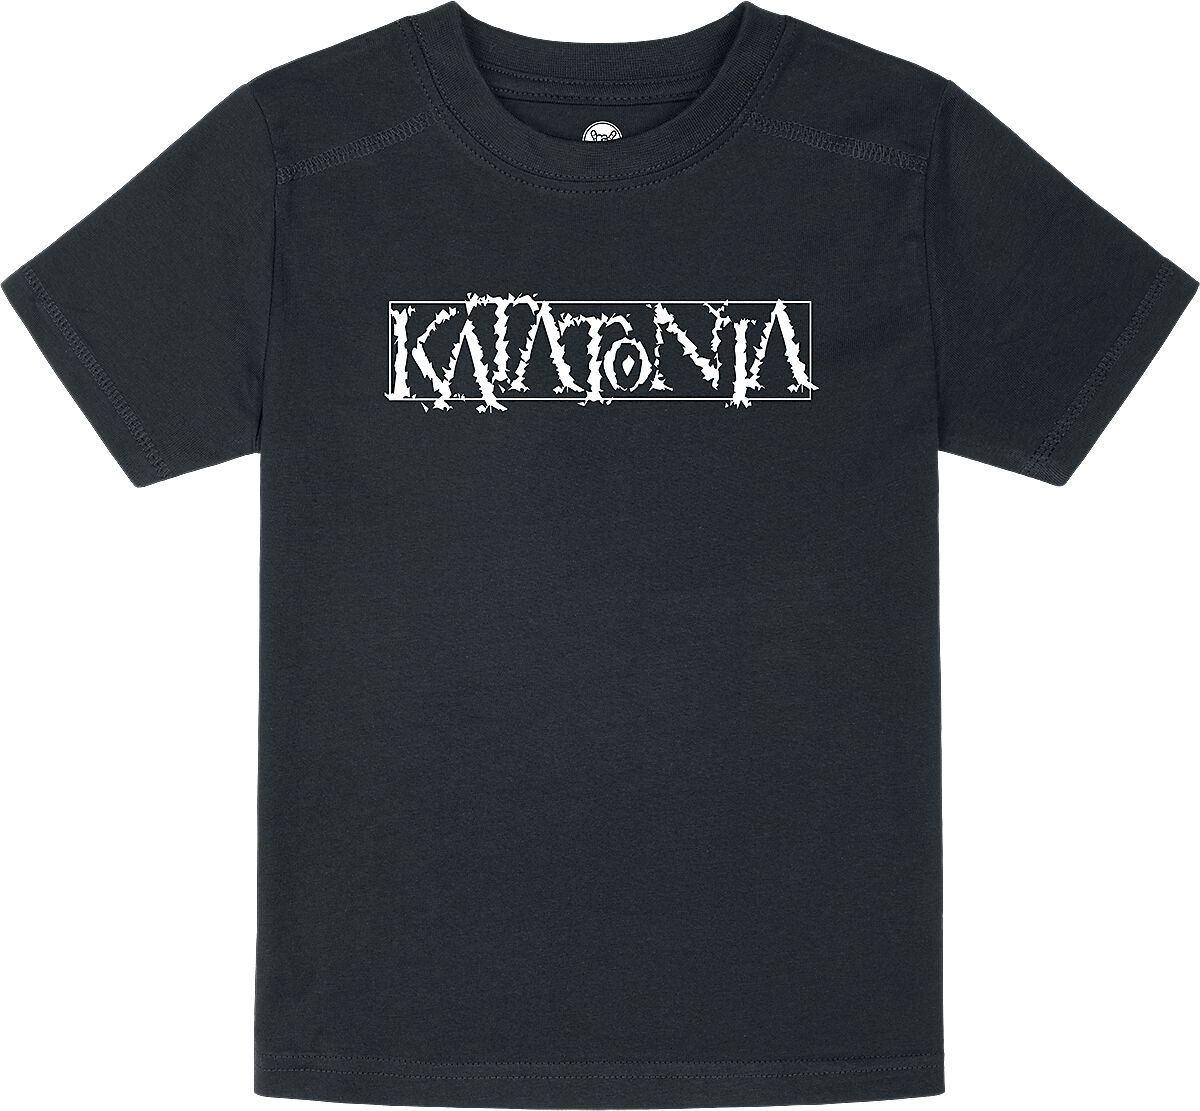 T-shirt de Katatonia - Metal-Kids - Logo - 164 - pour filles & garçonse - noir